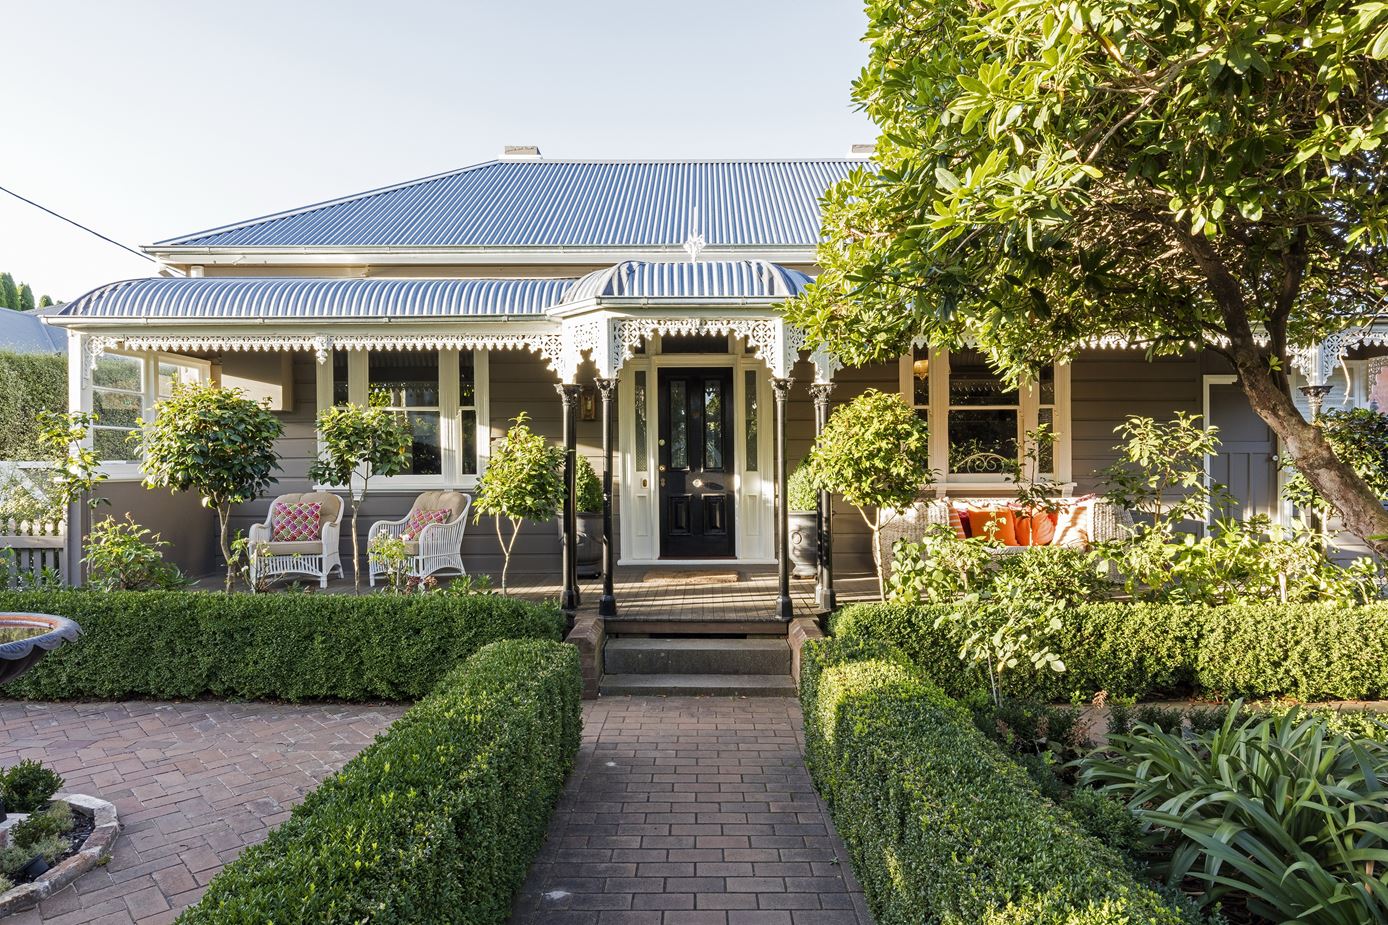 Bundaroo House in Bowral, Australia by Tziallas Omeara Architecture Studio